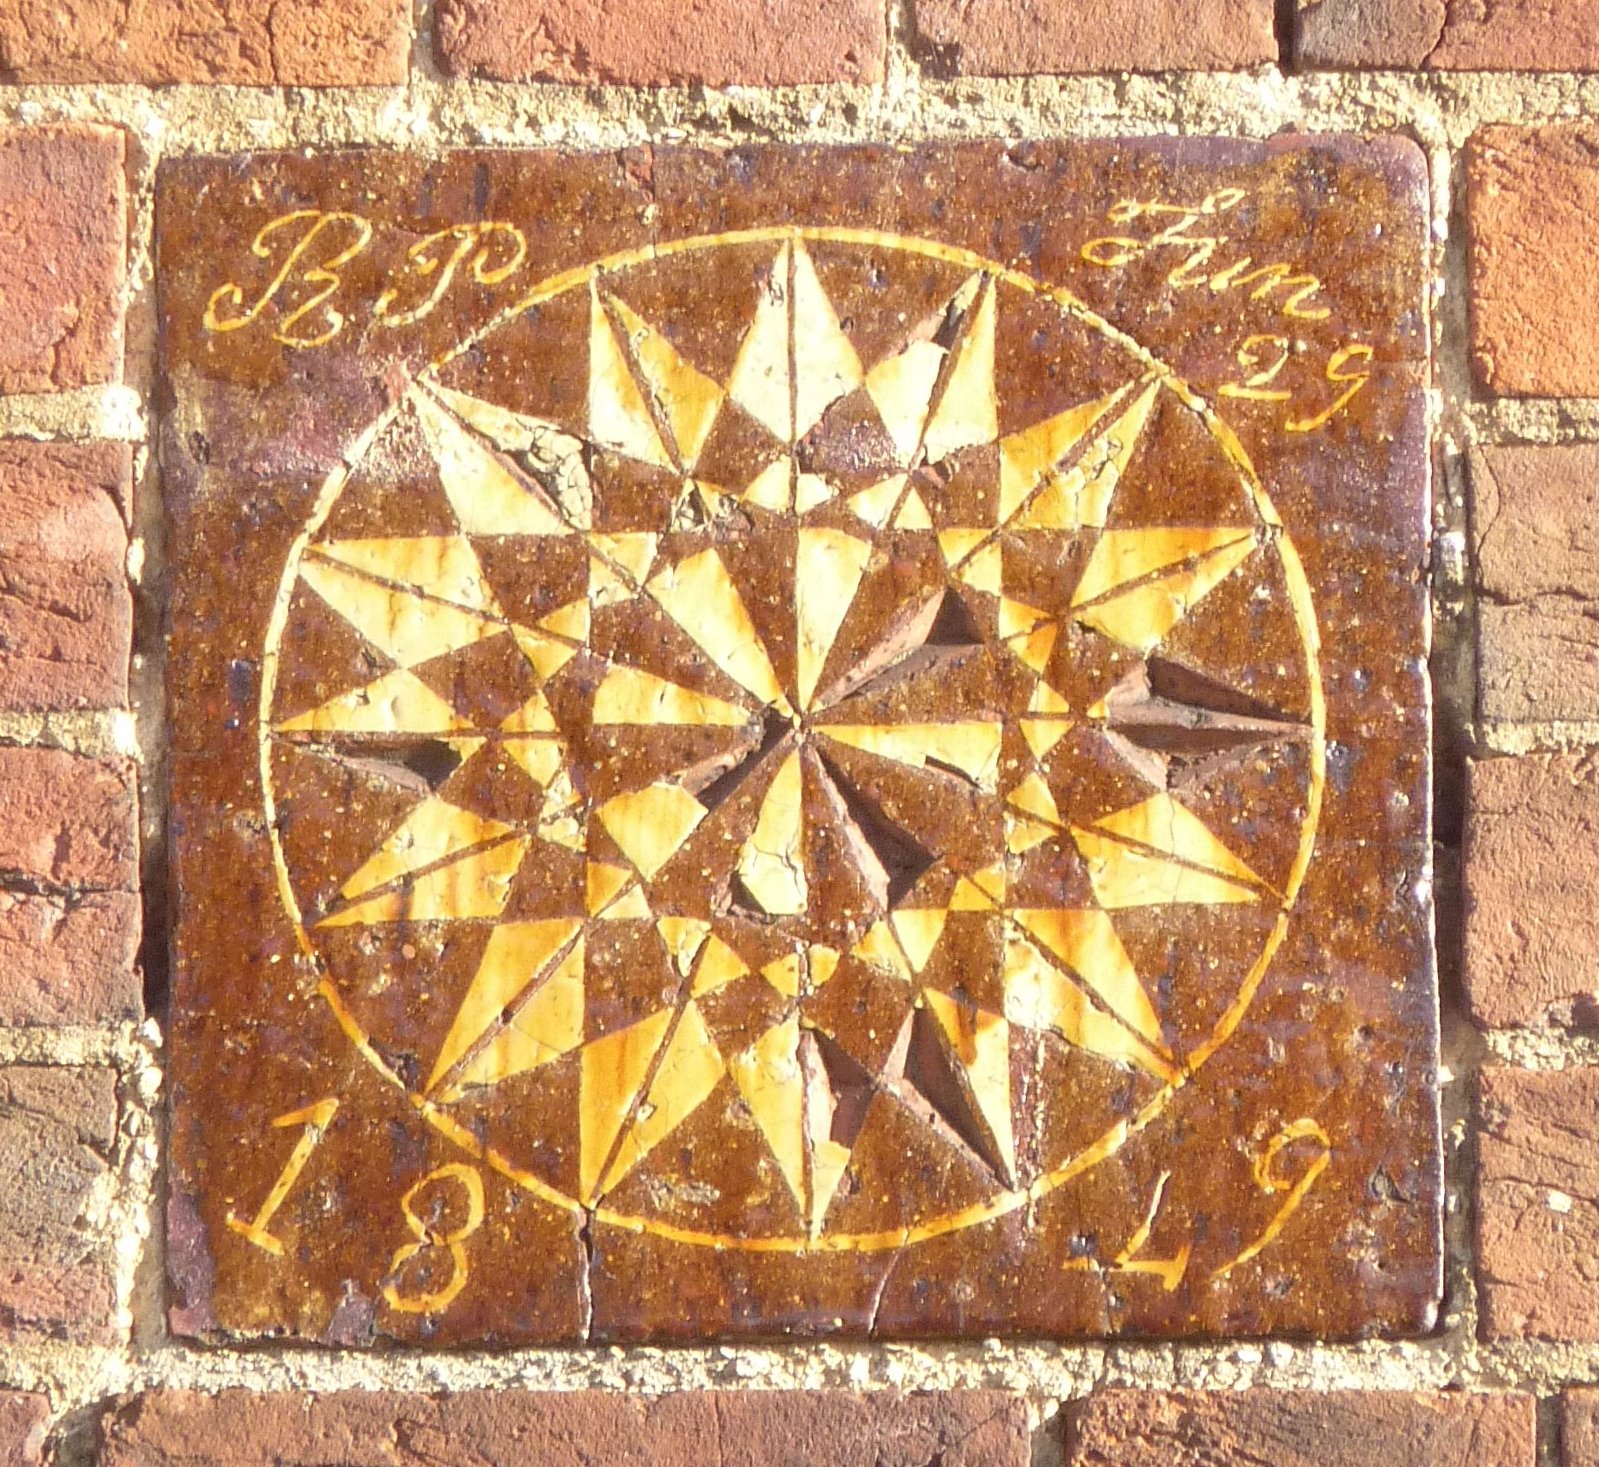 202 Abingdon Road date plaque